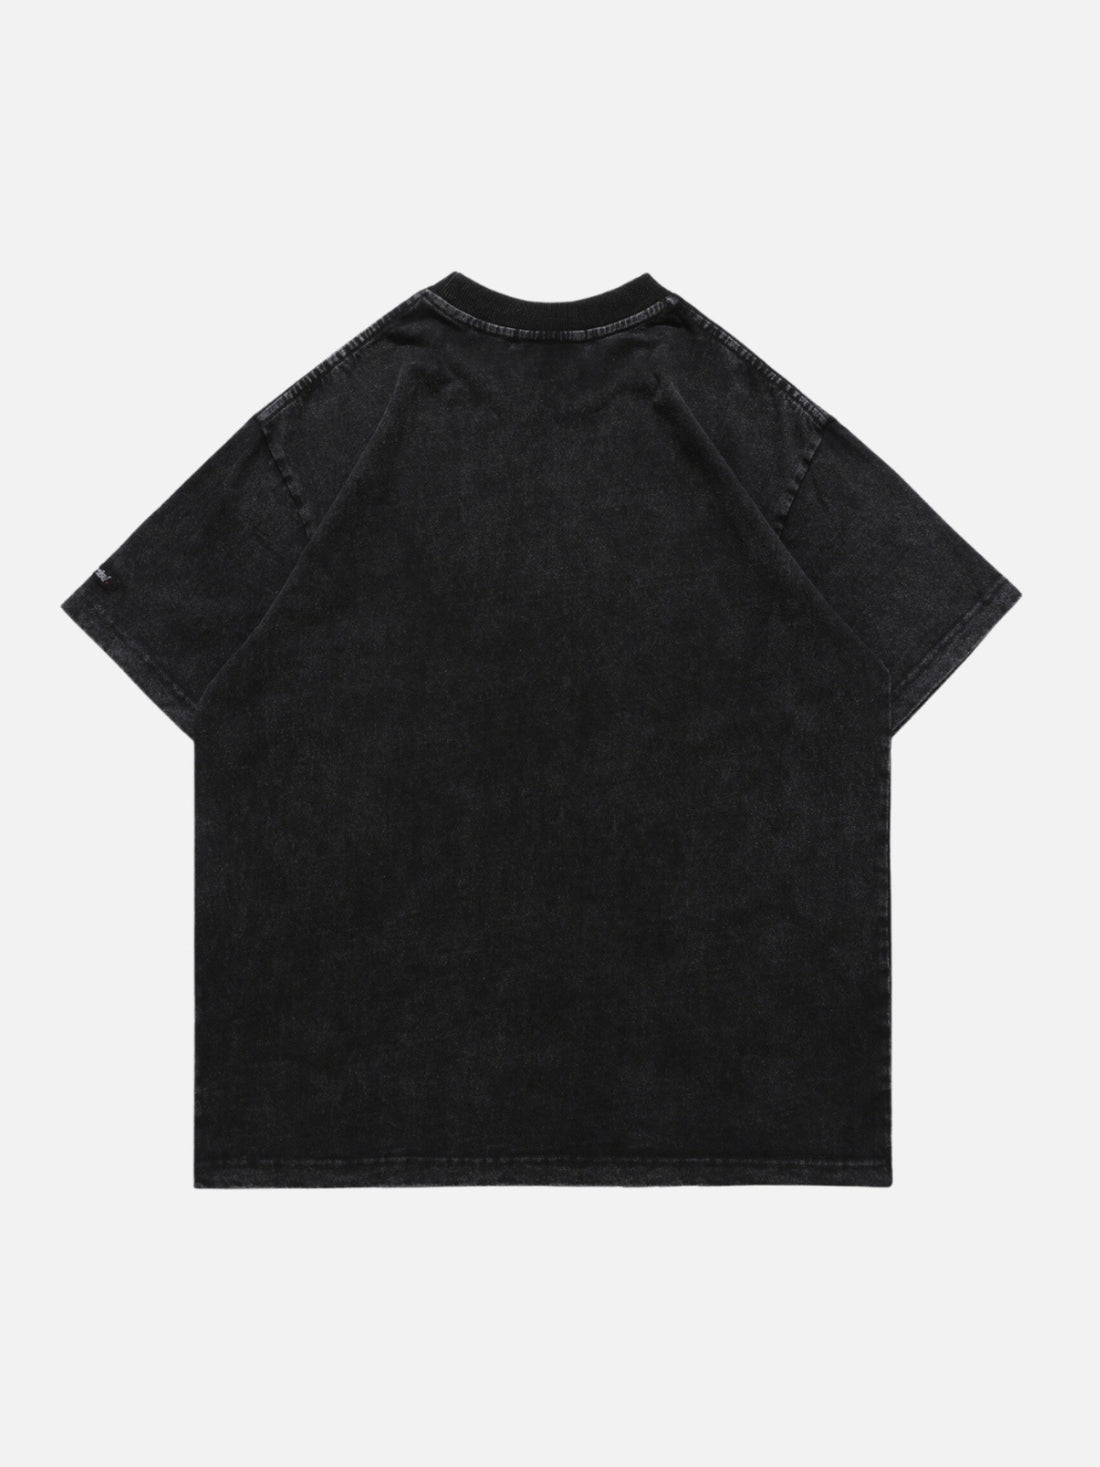 DARKANGEL - Oversized Print T-Shirt Black | Teenwear.eu